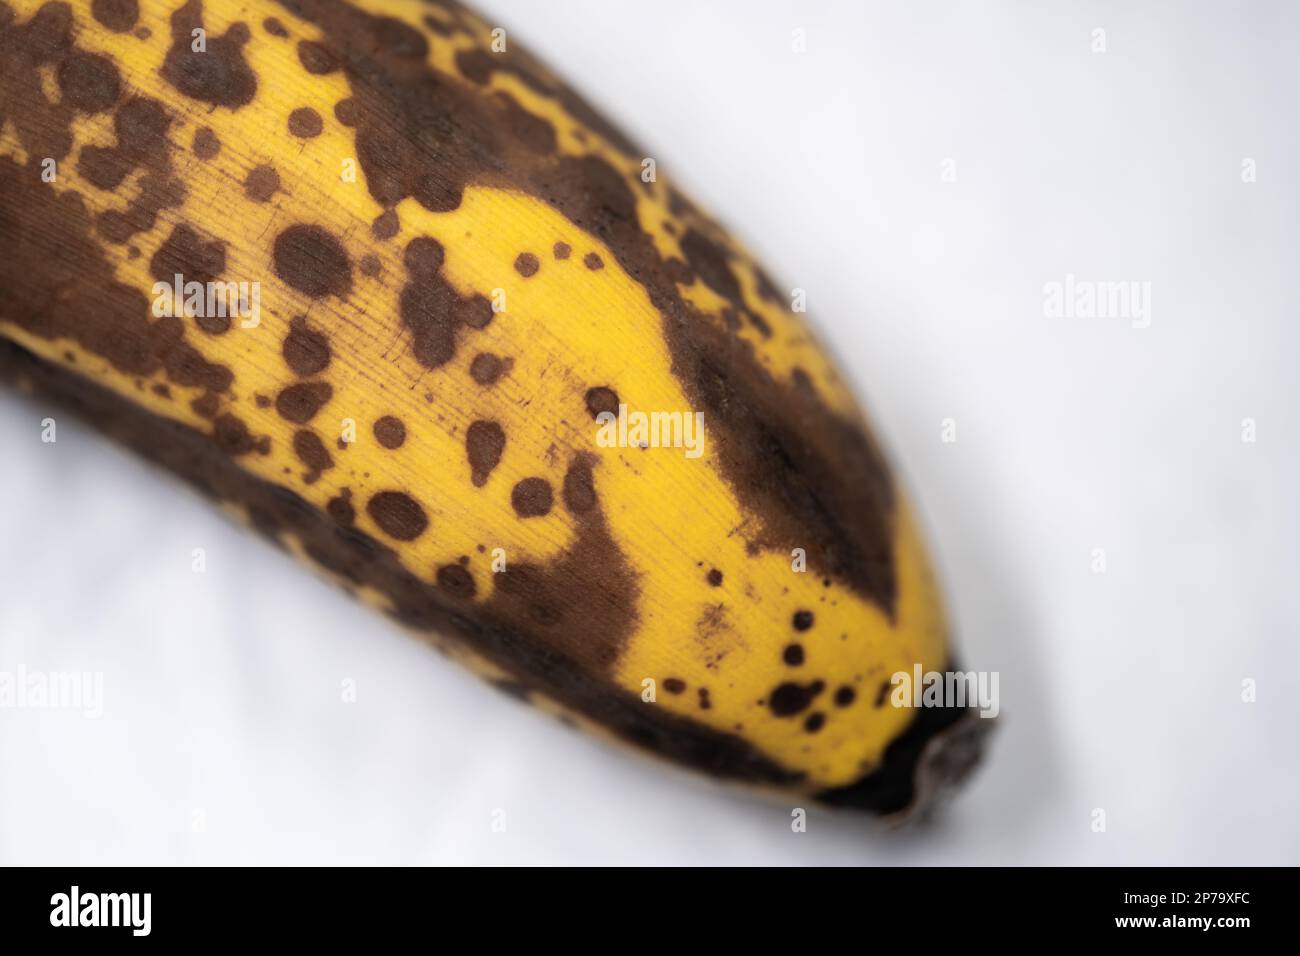 Banana with dark spots. Ripe banana. Isolated on white background. Selective focus. Stock Photo